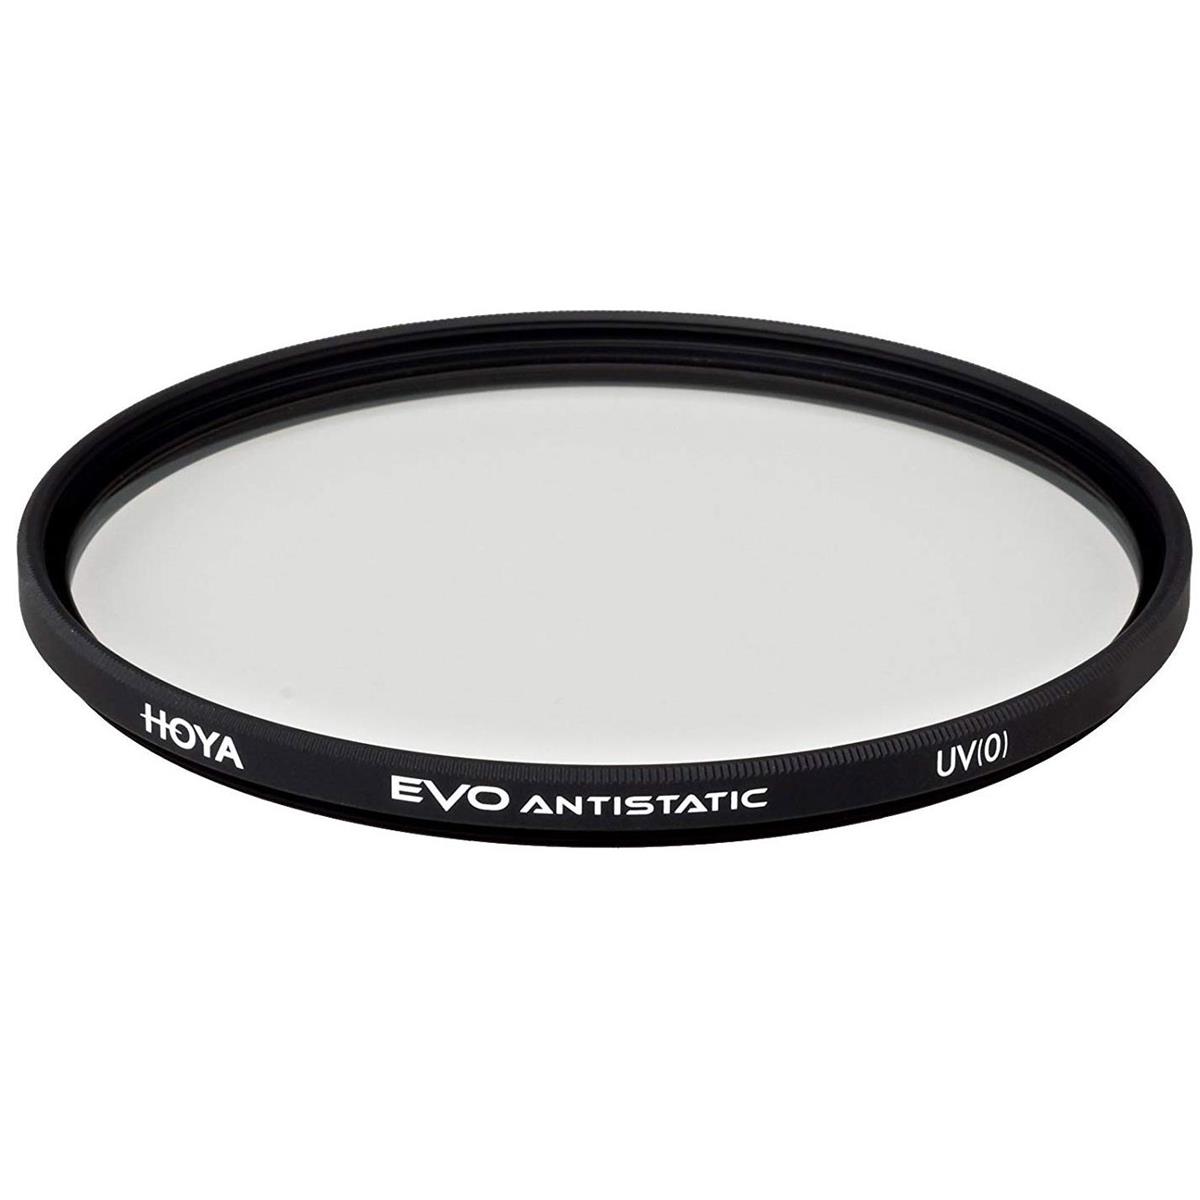 Hoya Evo Antistatic UV Filter - 43mm цена и фото